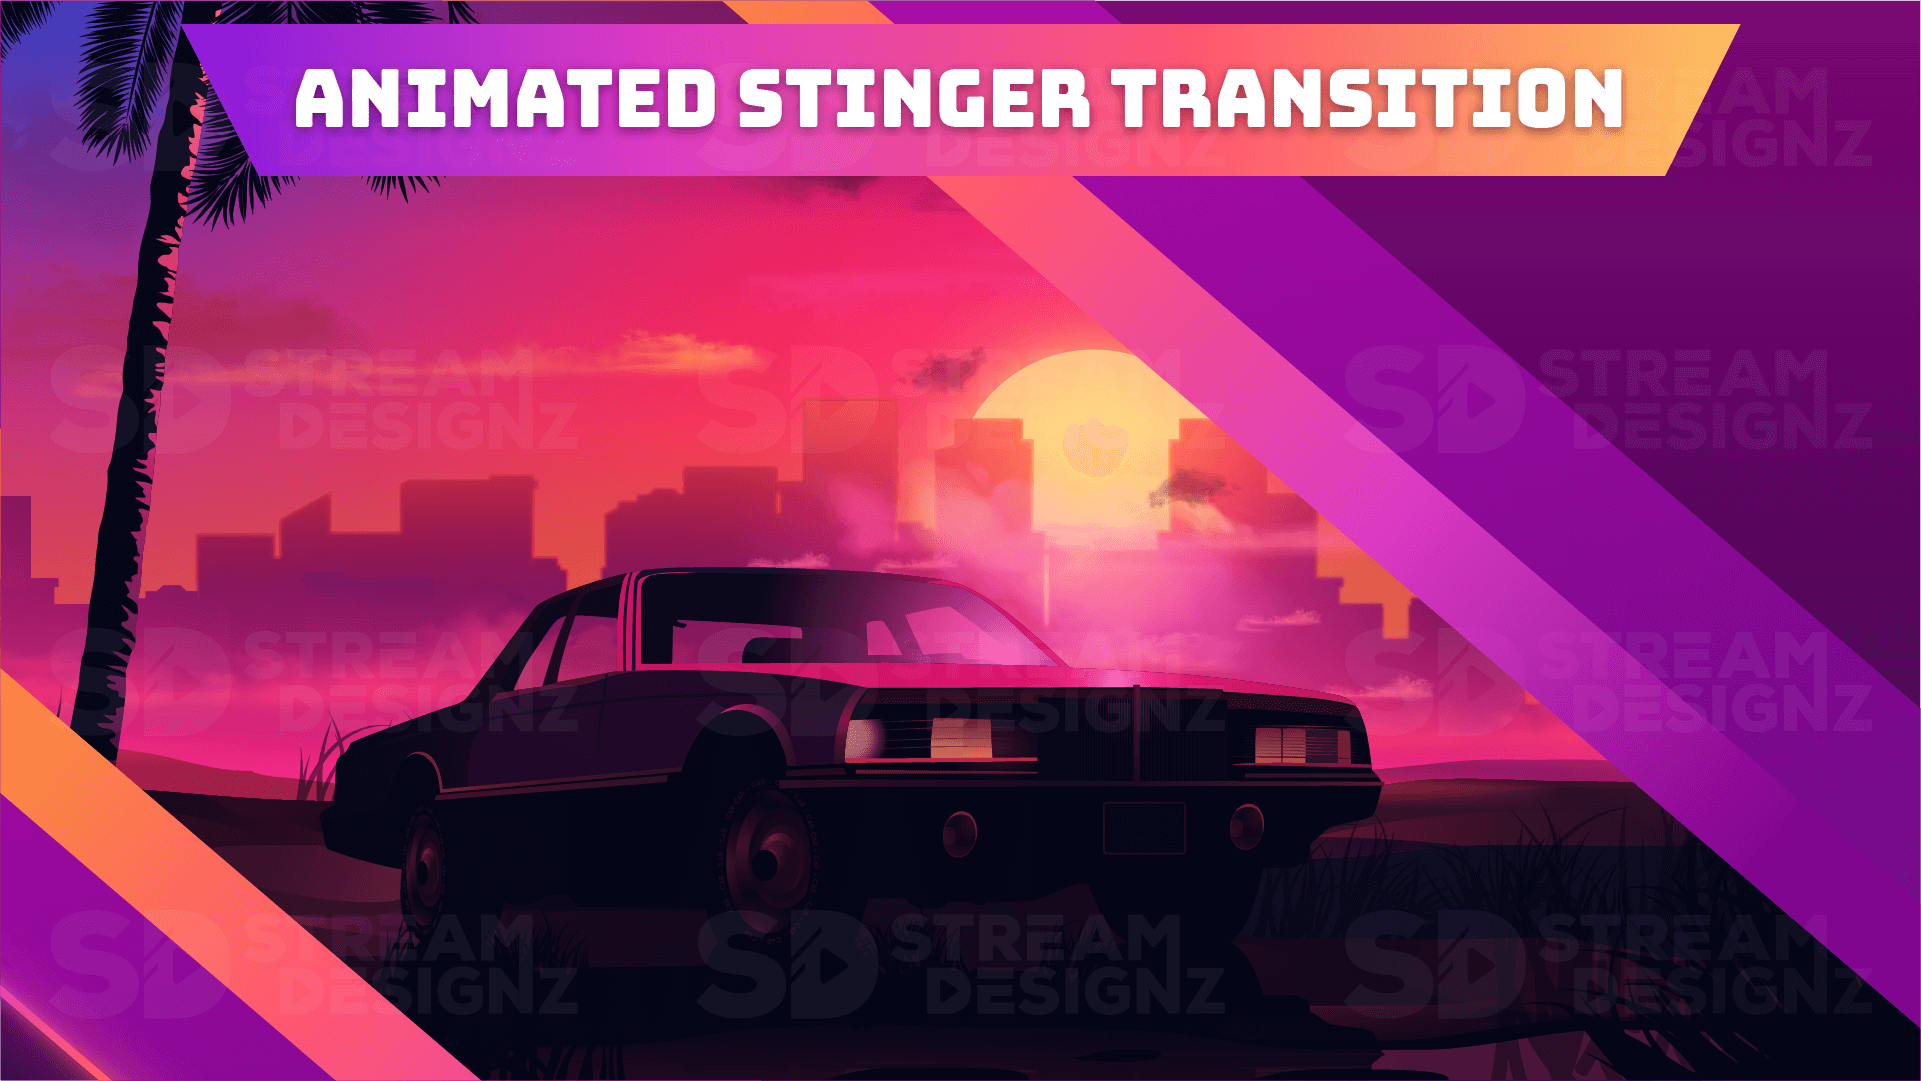 Stinger transition sunset city preview video stream designz